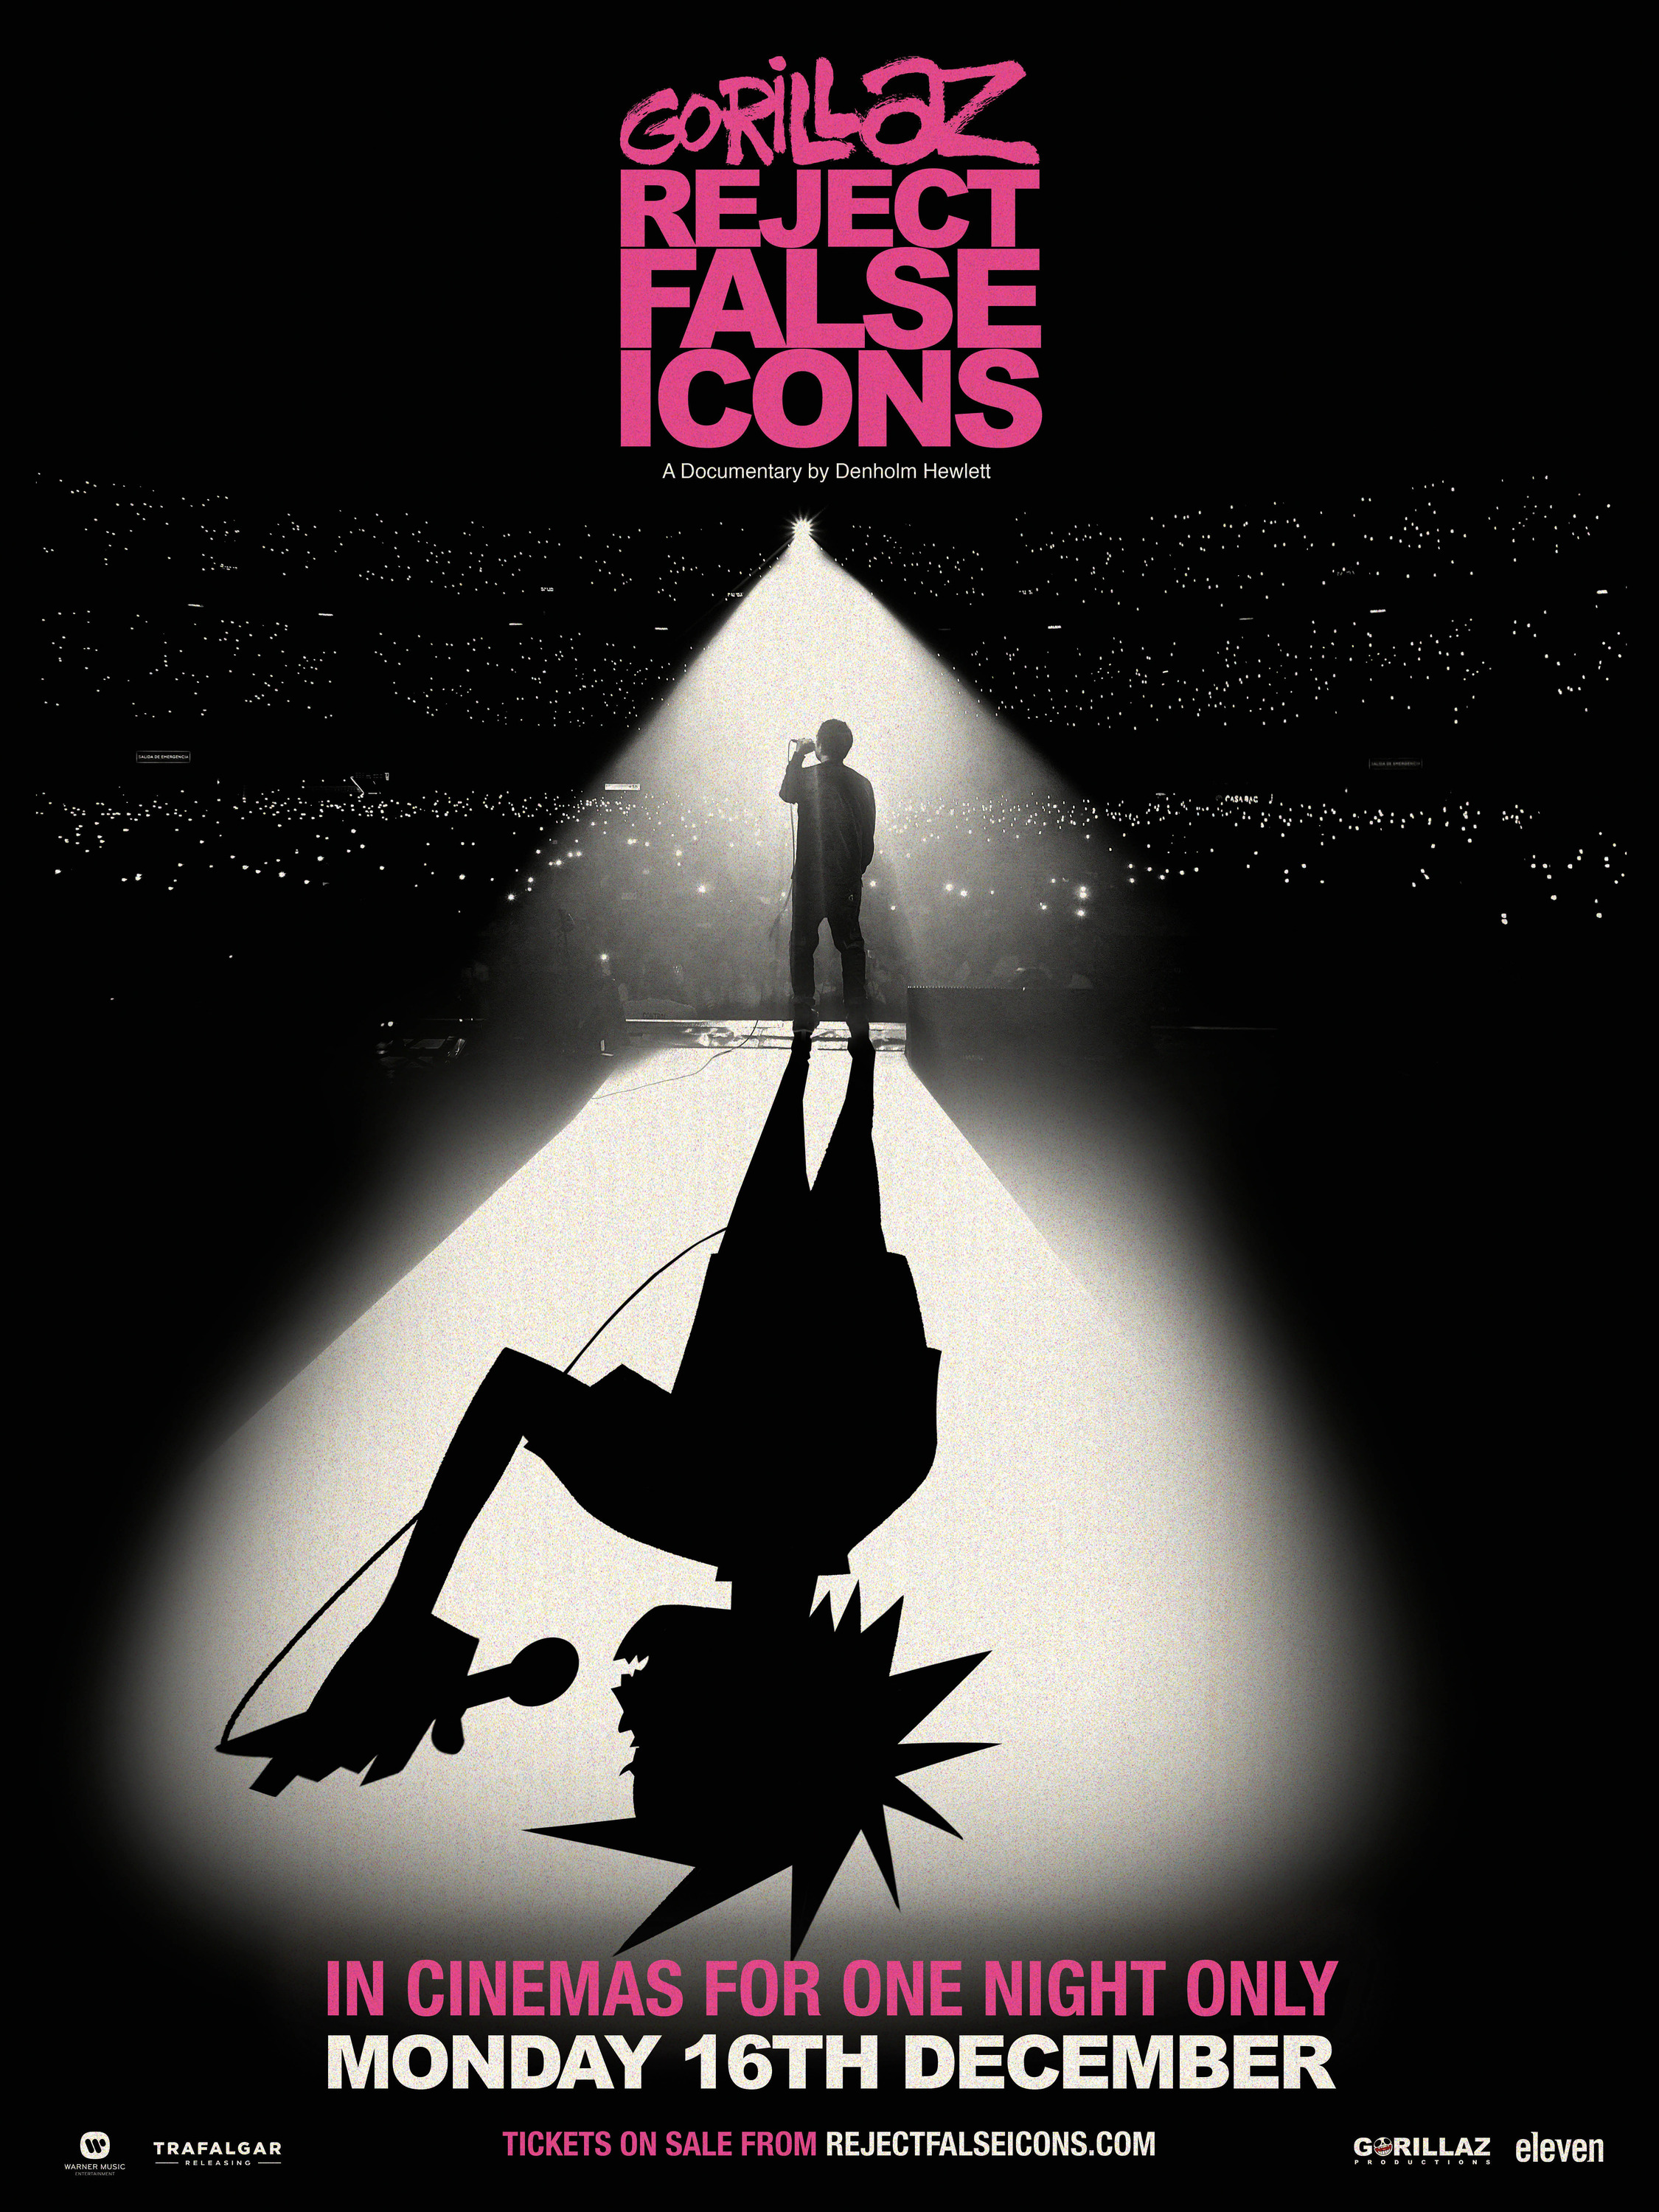 Mega Sized Movie Poster Image for Gorillaz: Reject False Icons 